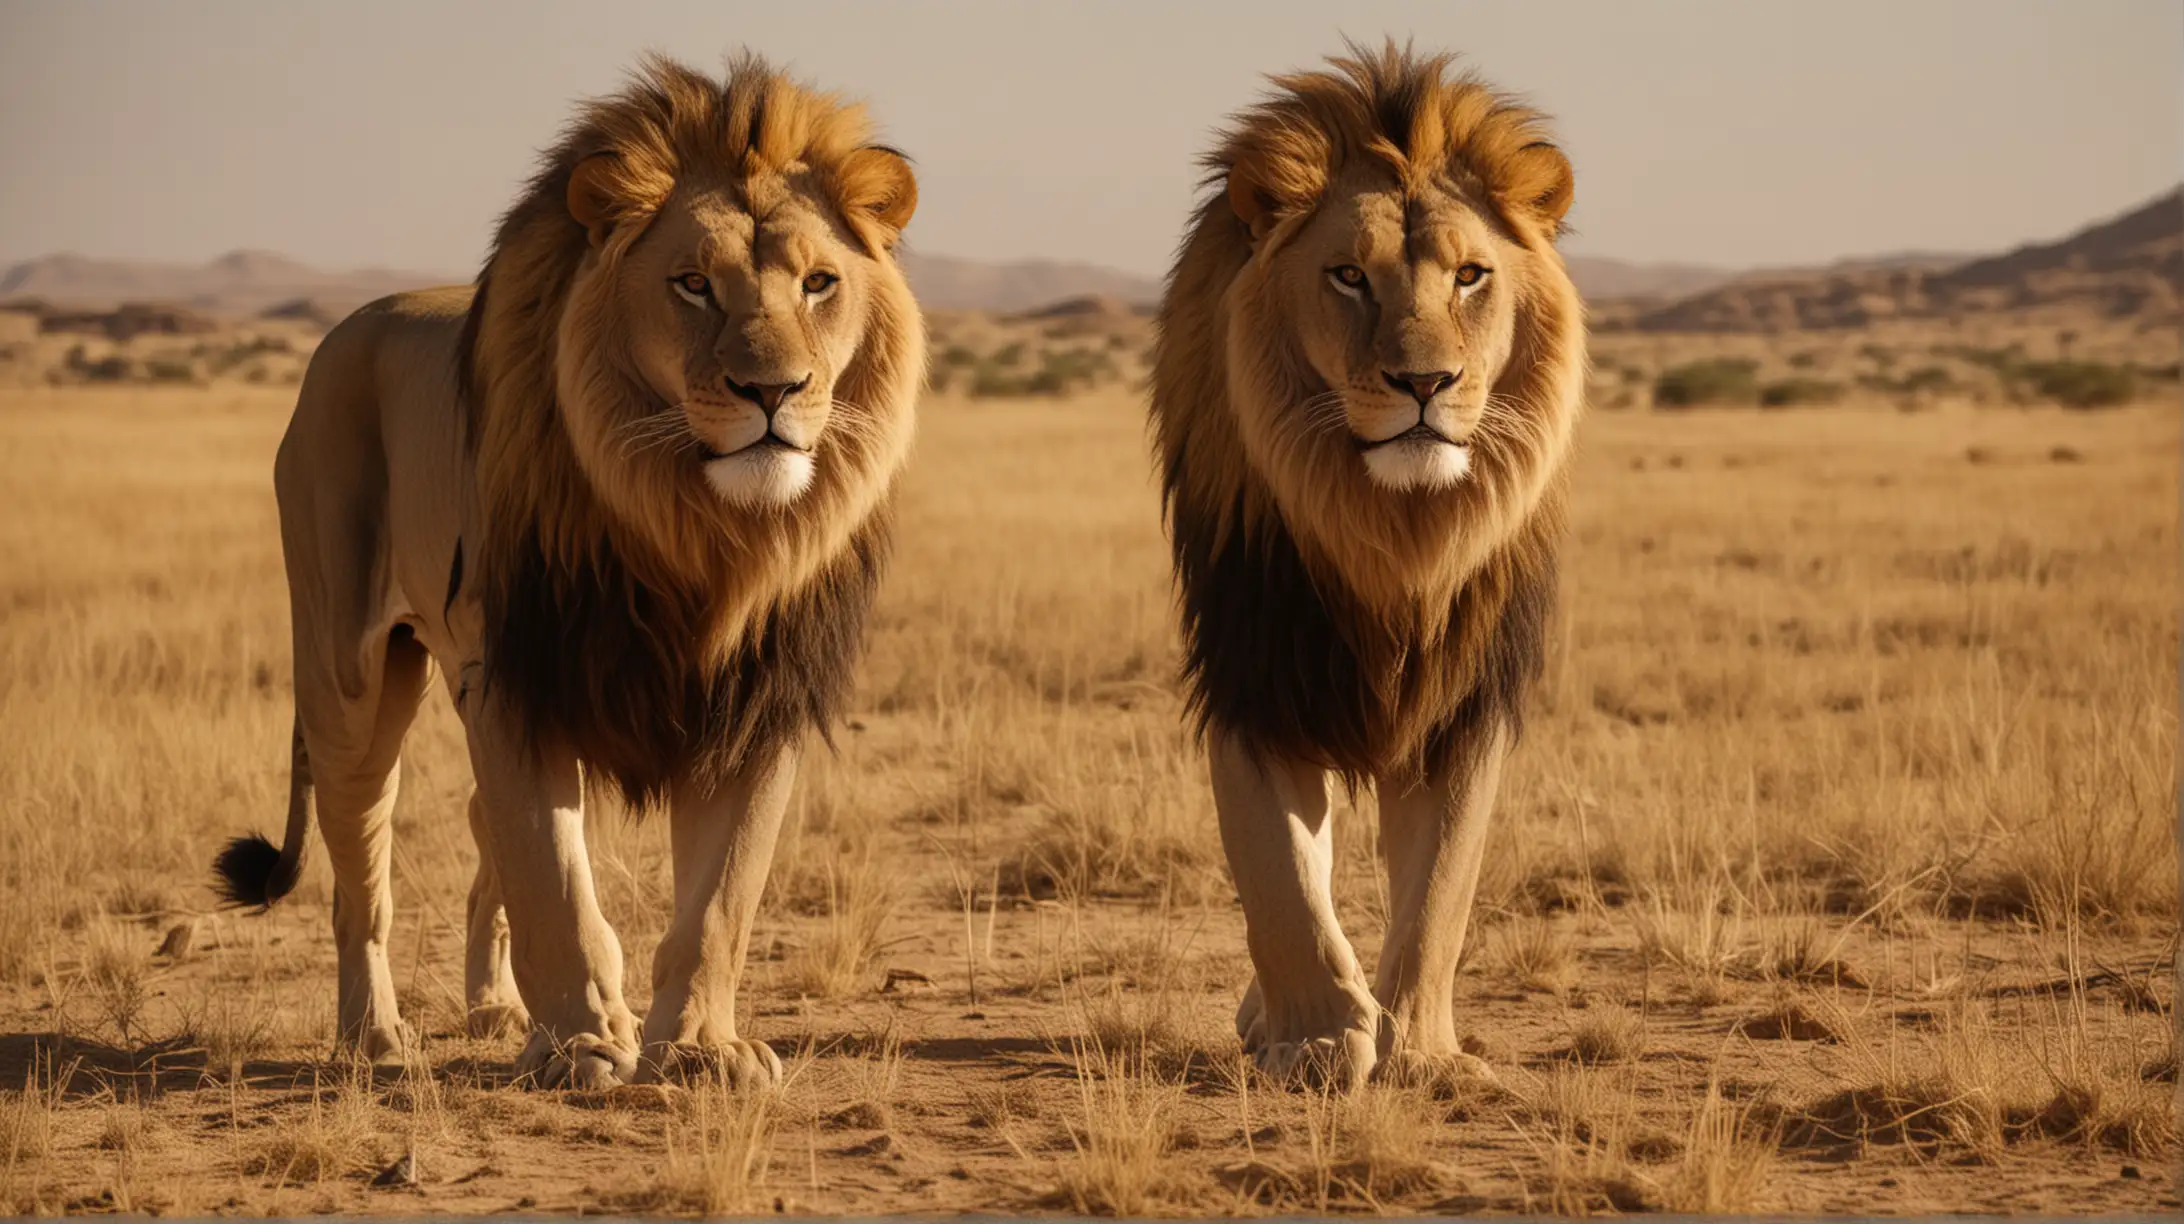 Courageous Encounter Biblical Era Strong Man Confronts Lion in Desert